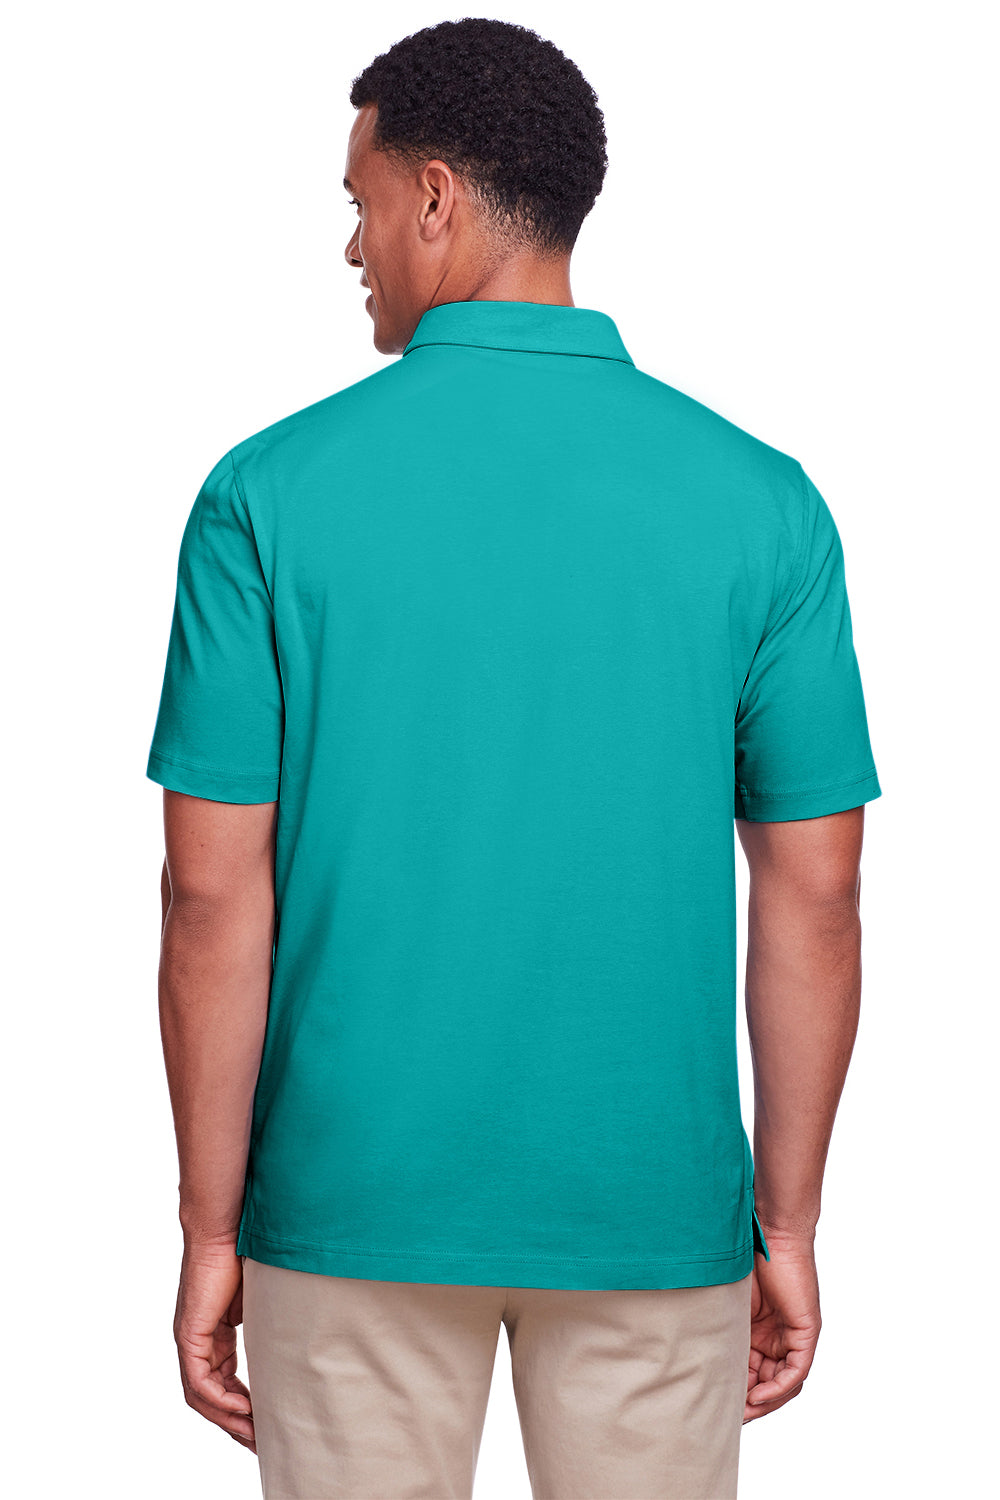 UltraClub UC105 Mens Lakeshore Performance Moisture Wicking Short Sleeve Polo Shirt Jade Green Back